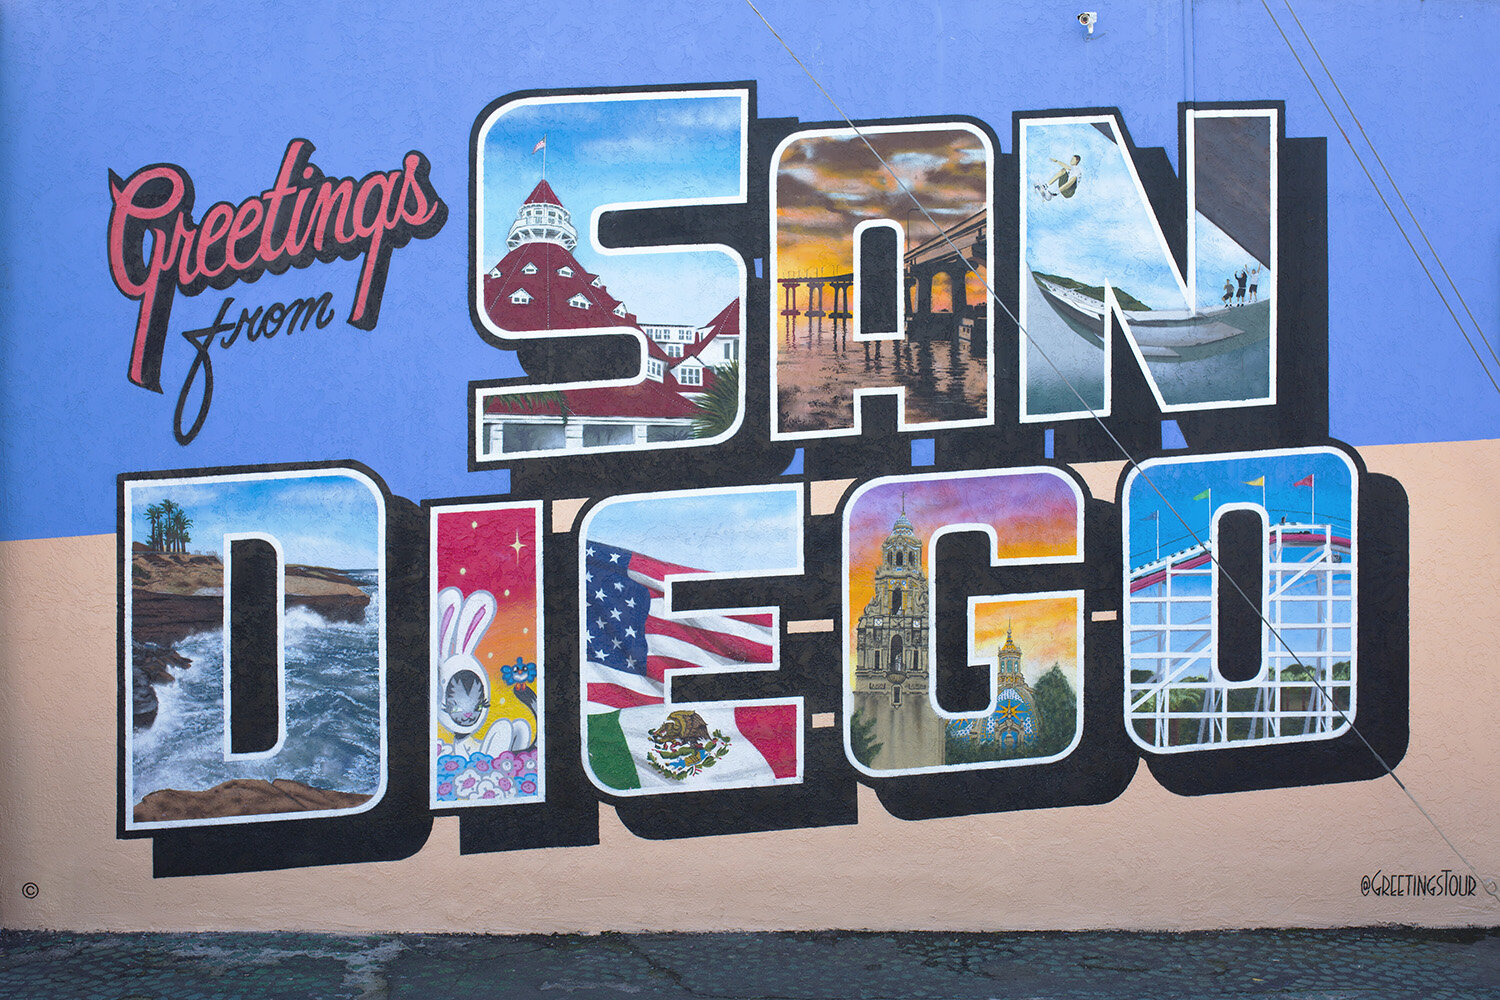 Greetings from San Diego Mural